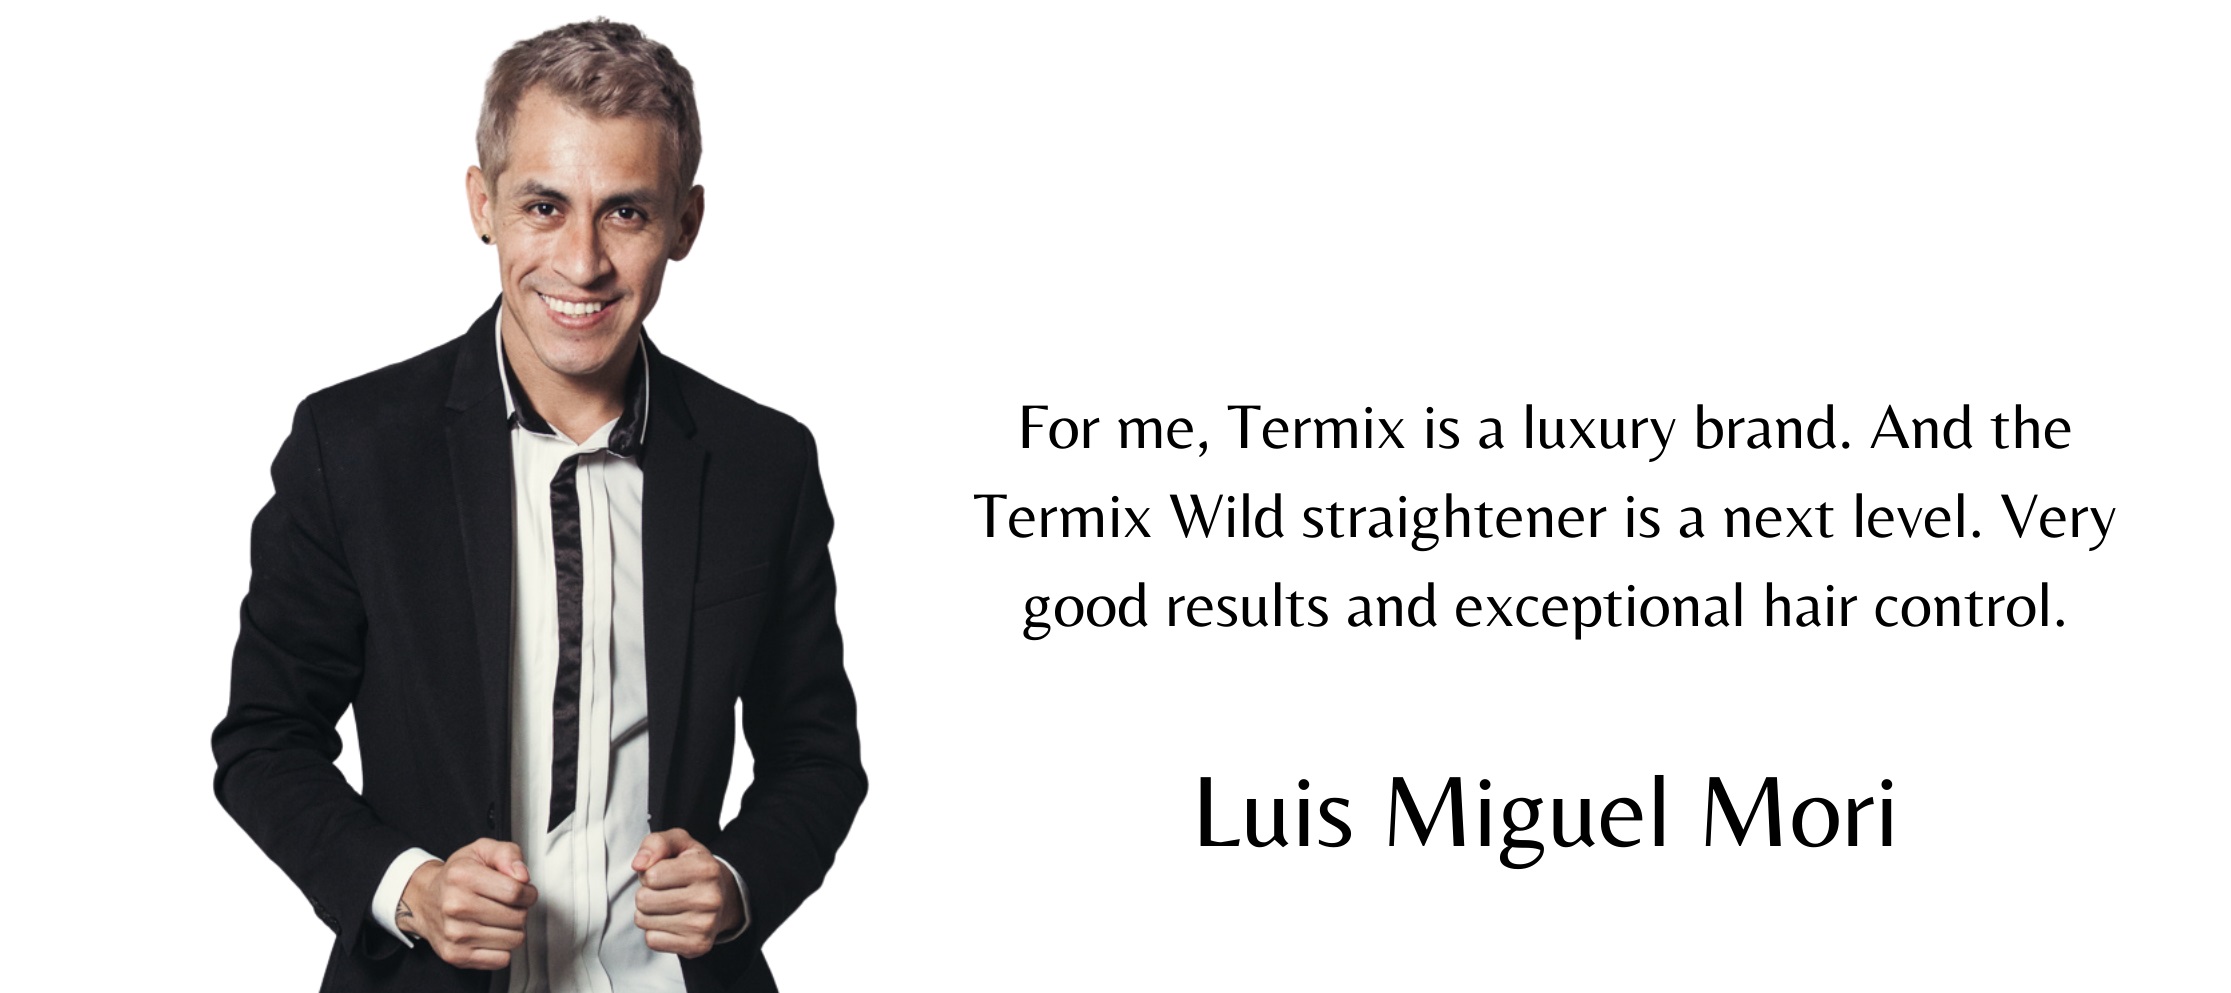 Luis miguel Mori about the Termix Wild hair straightener